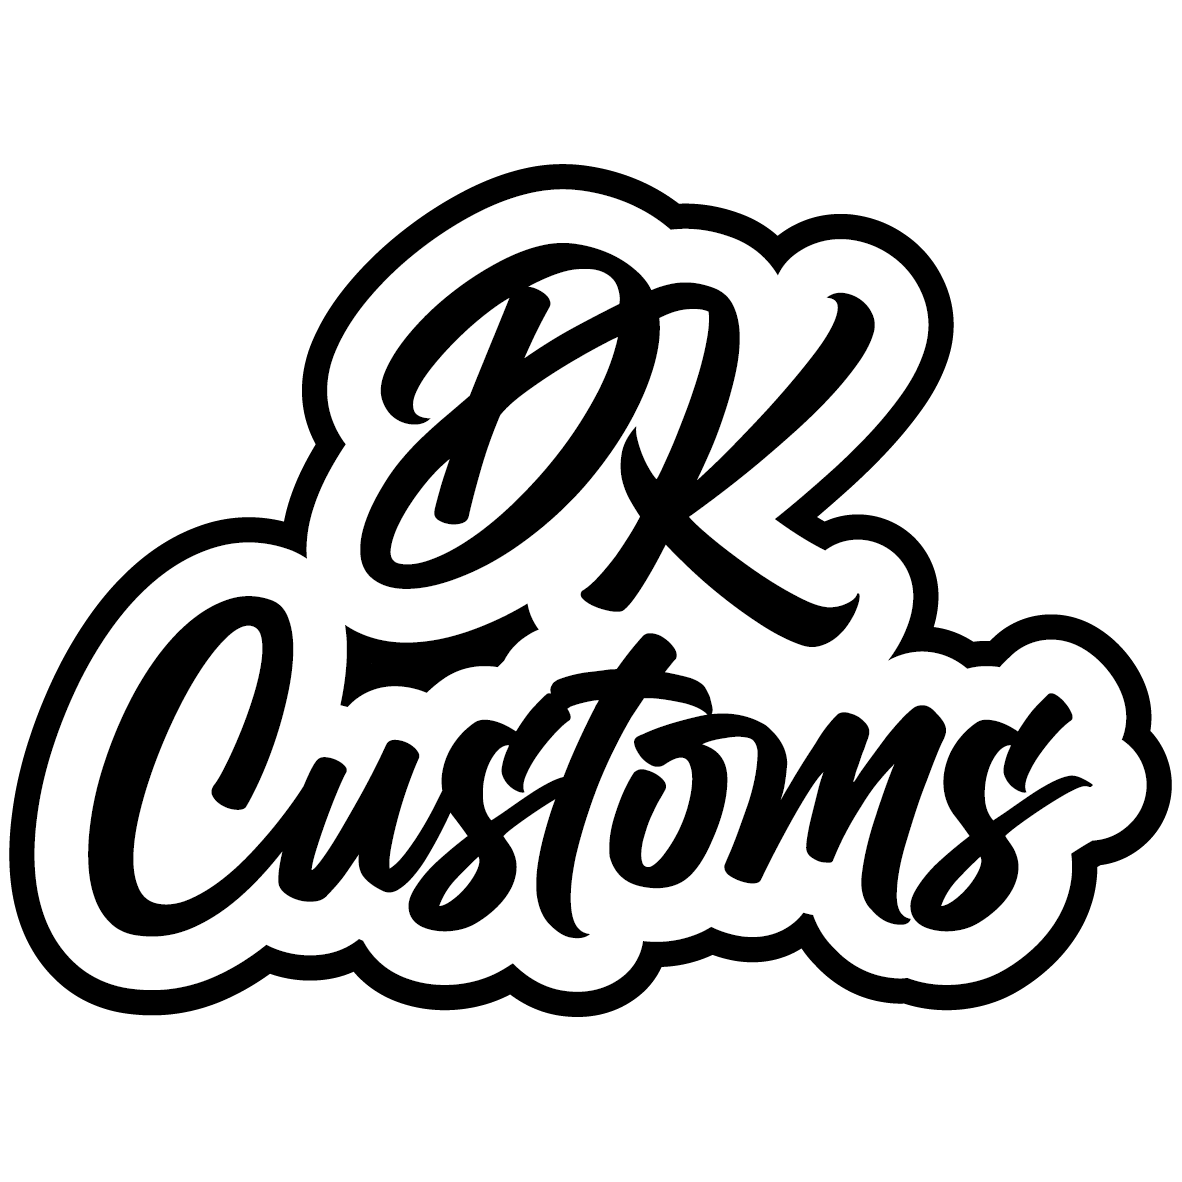 DK Customs